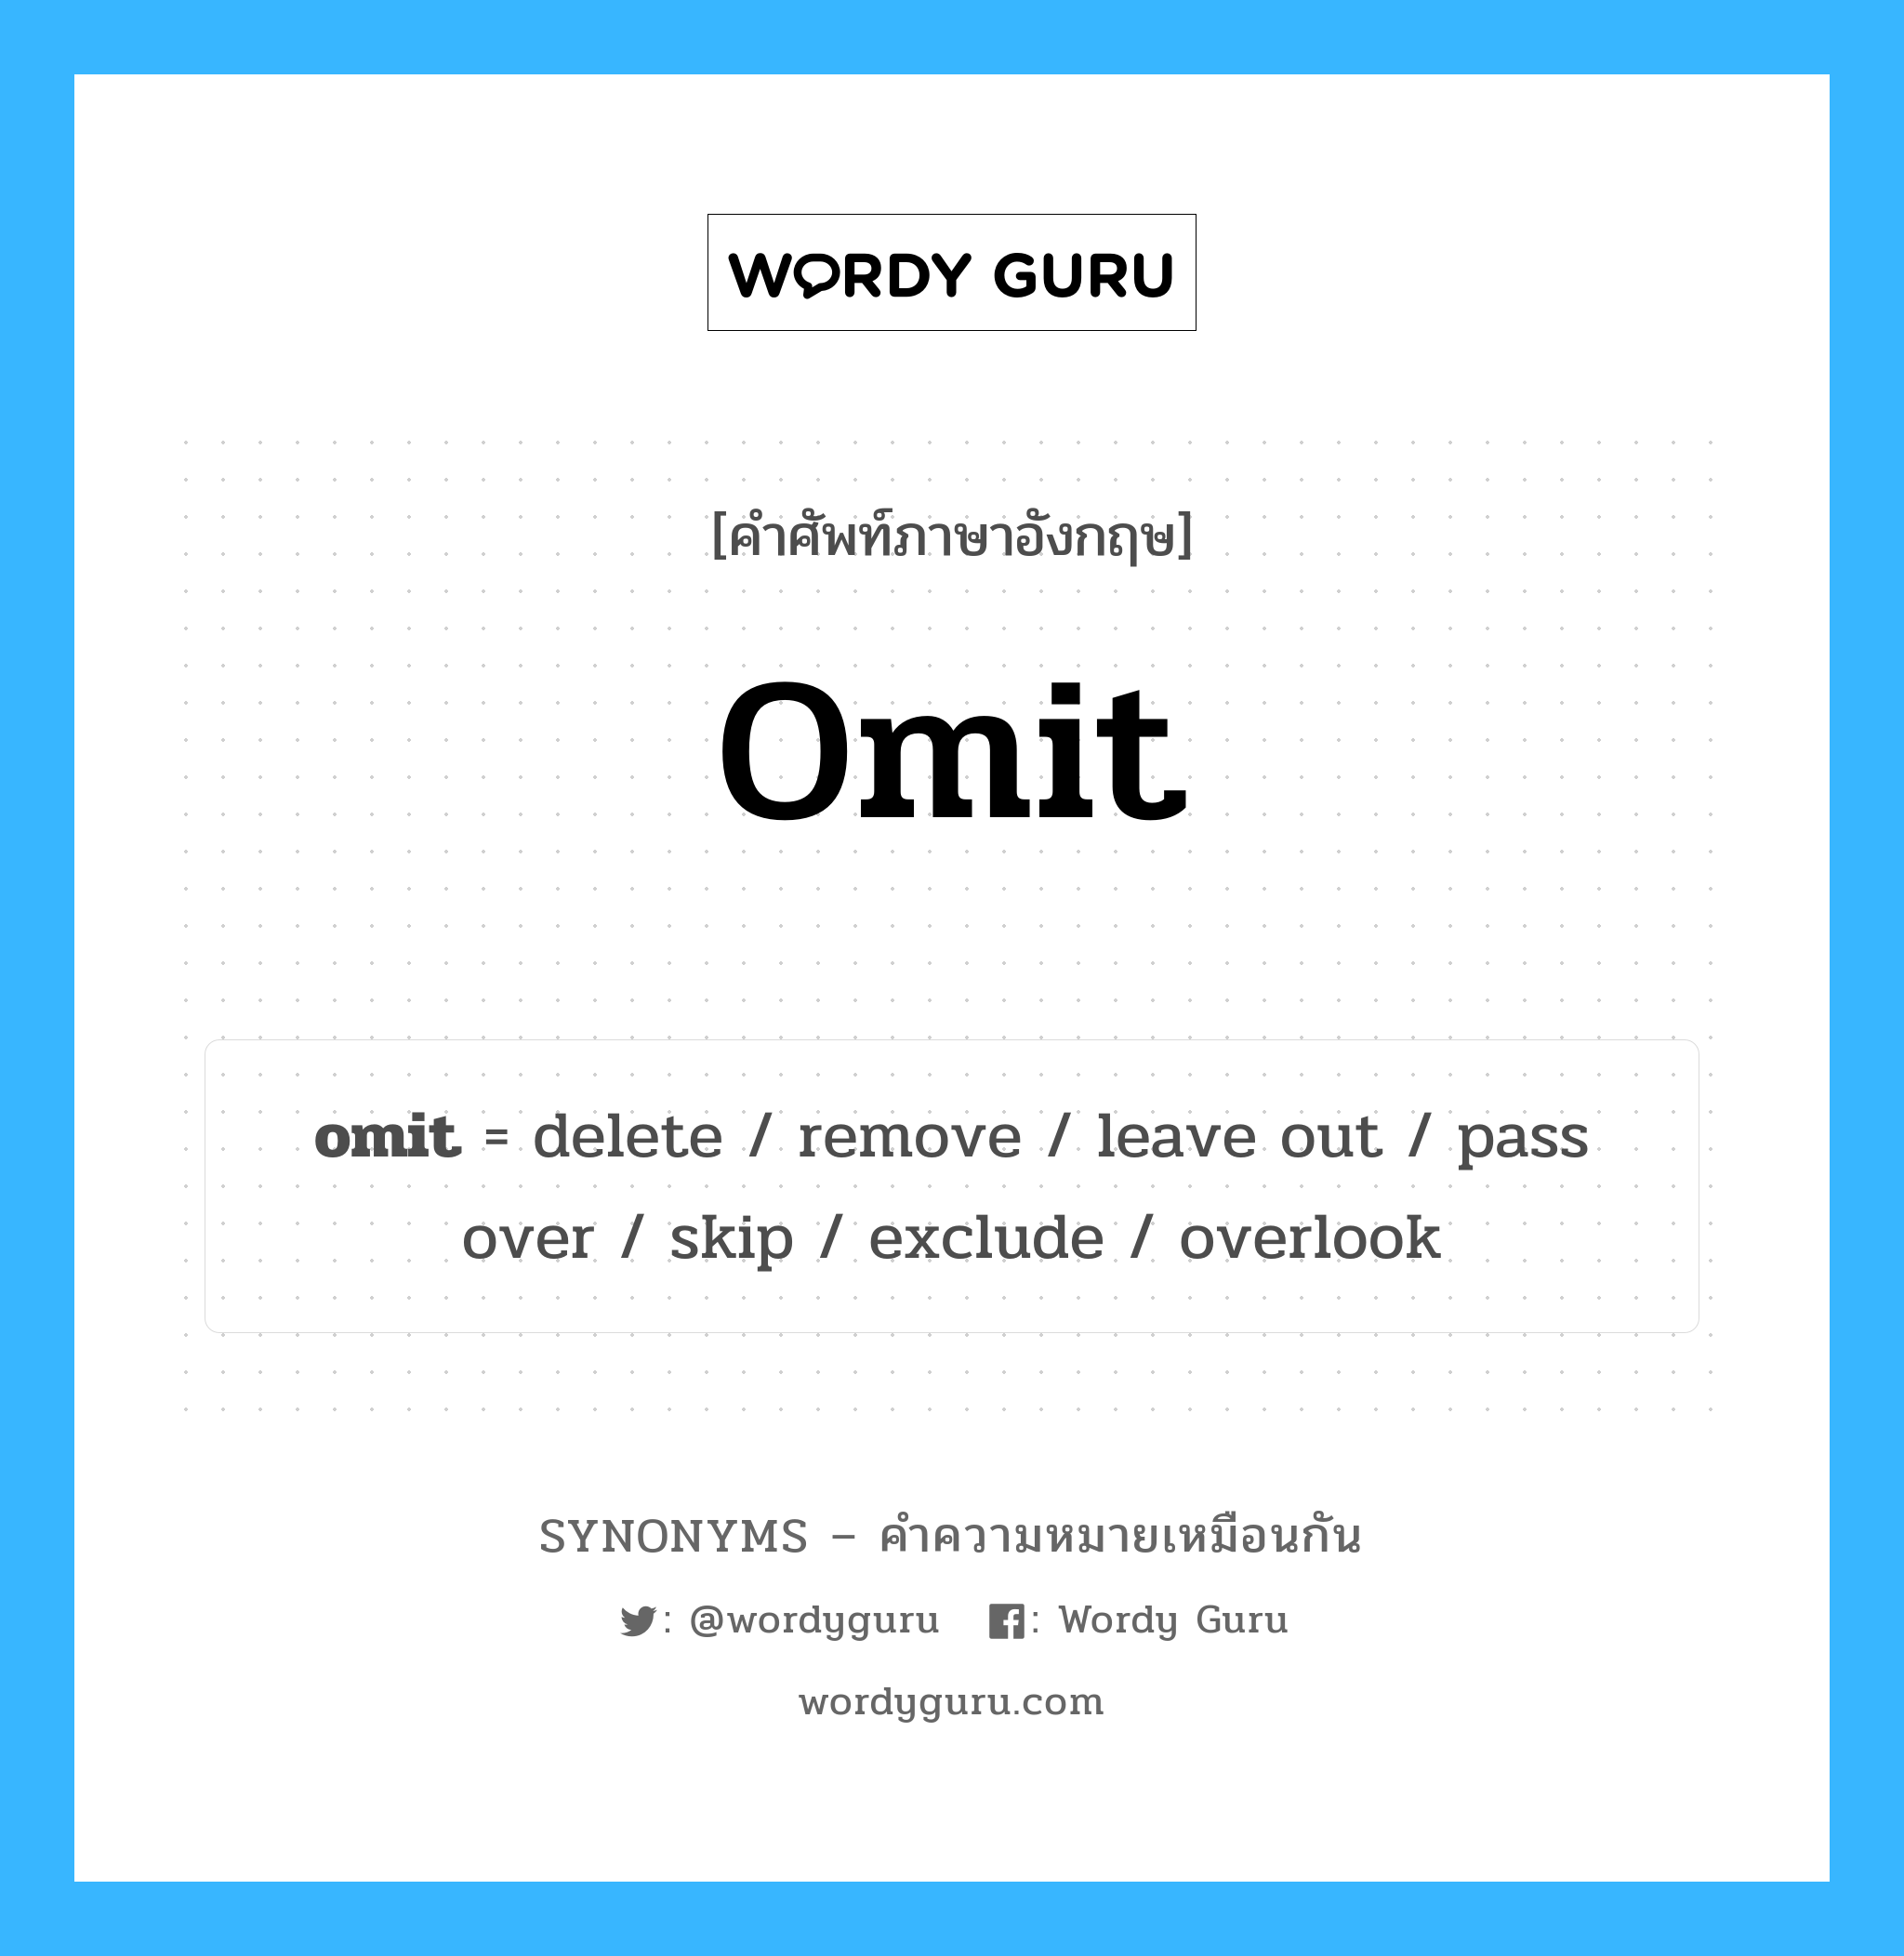 delete เป็นหนึ่งใน omit และมีคำอื่น ๆ อีกดังนี้, คำศัพท์ภาษาอังกฤษ delete ความหมายคล้ายกันกับ omit แปลว่า ลบ หมวด omit